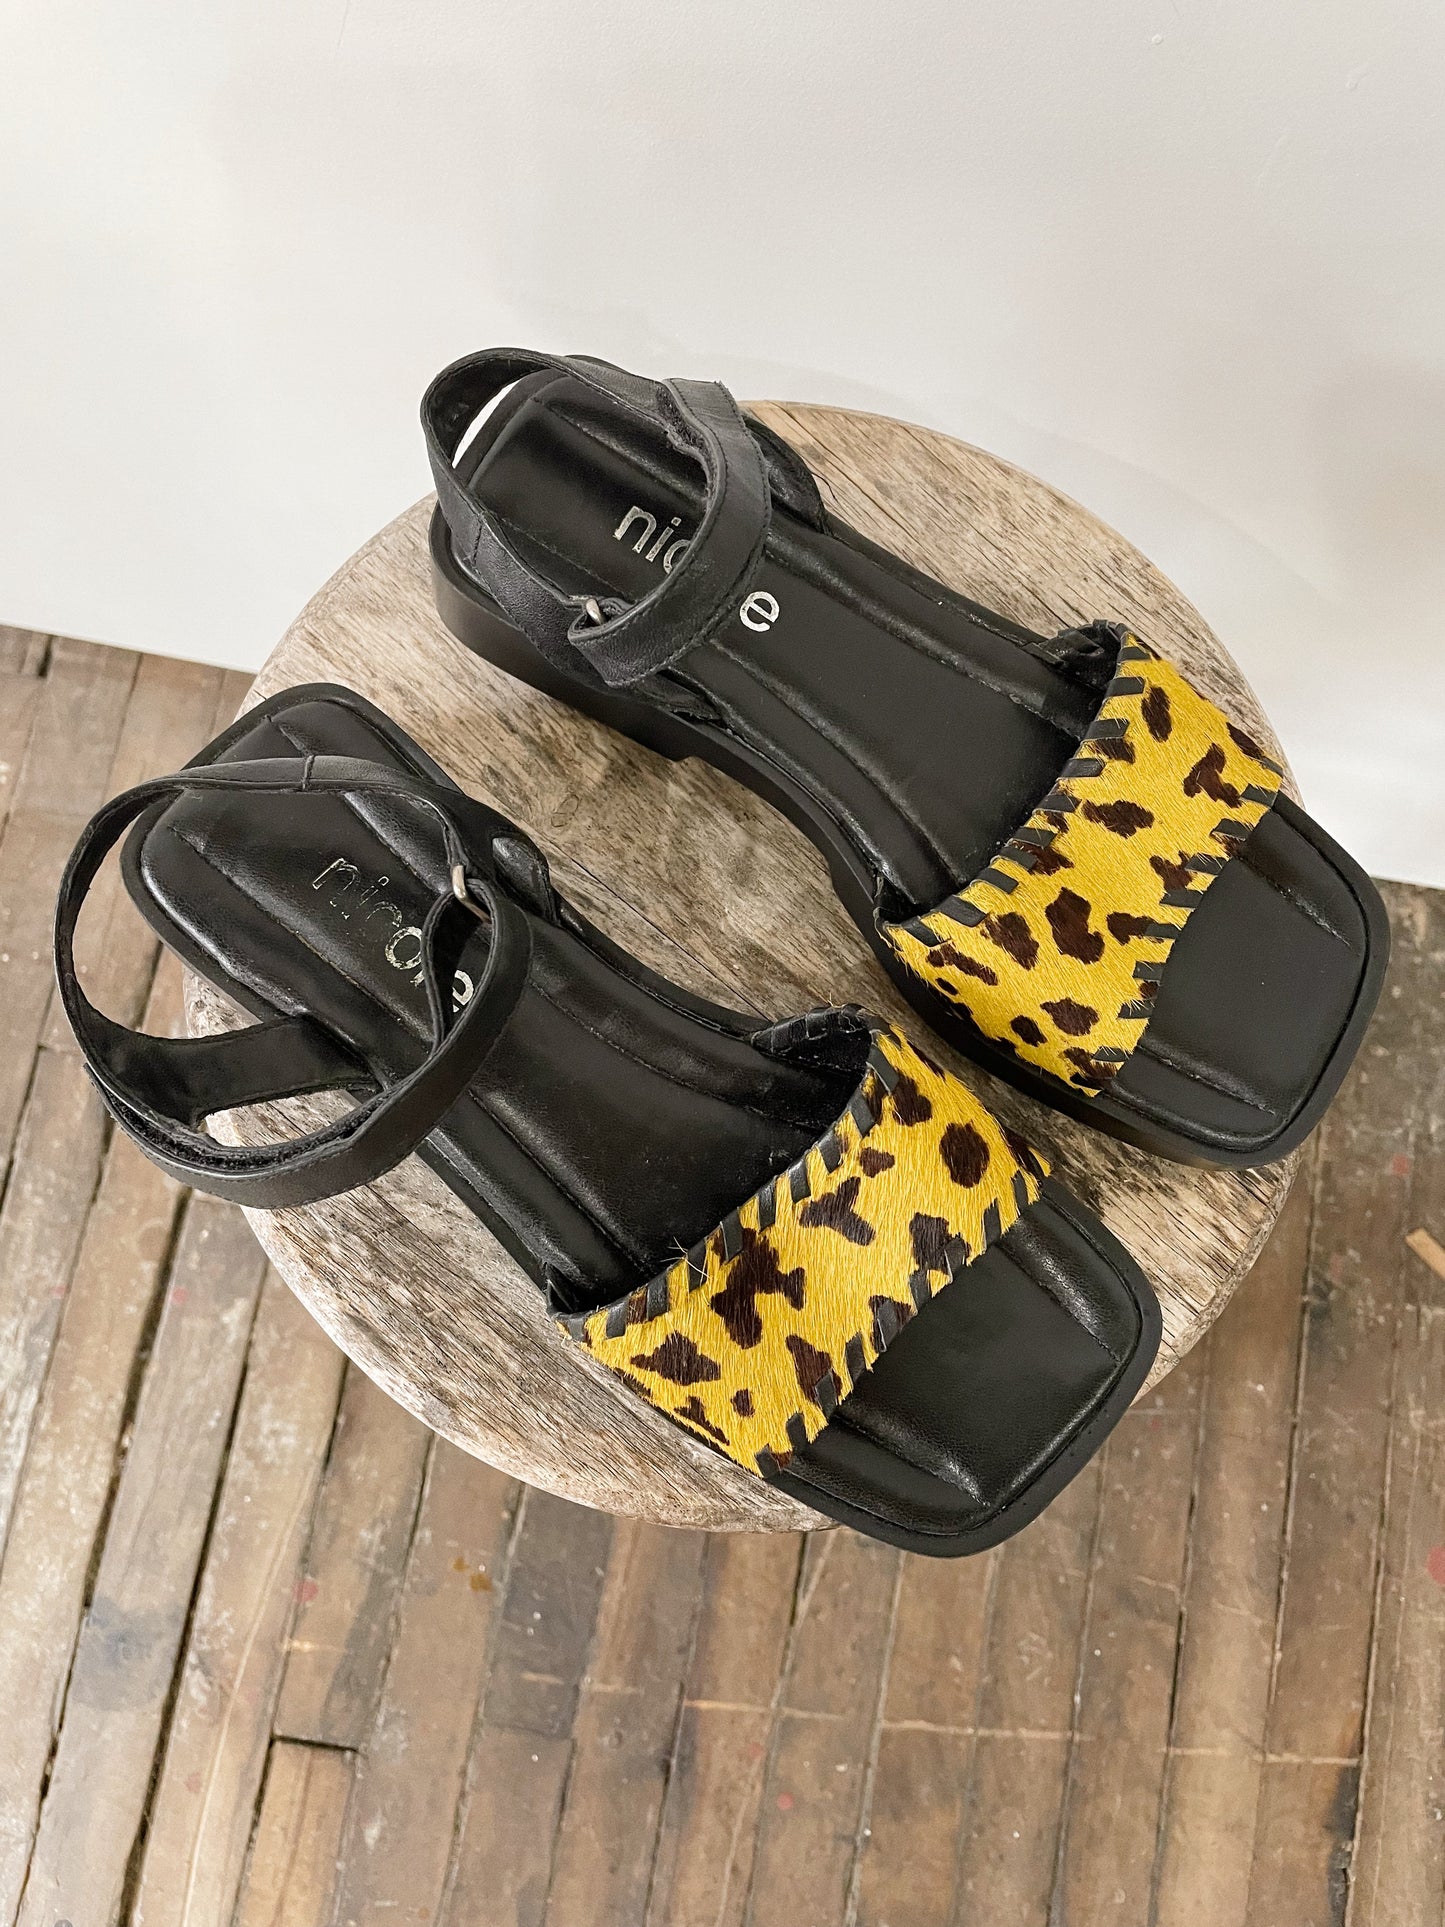 90s Cheetah Lug Sole Sandal